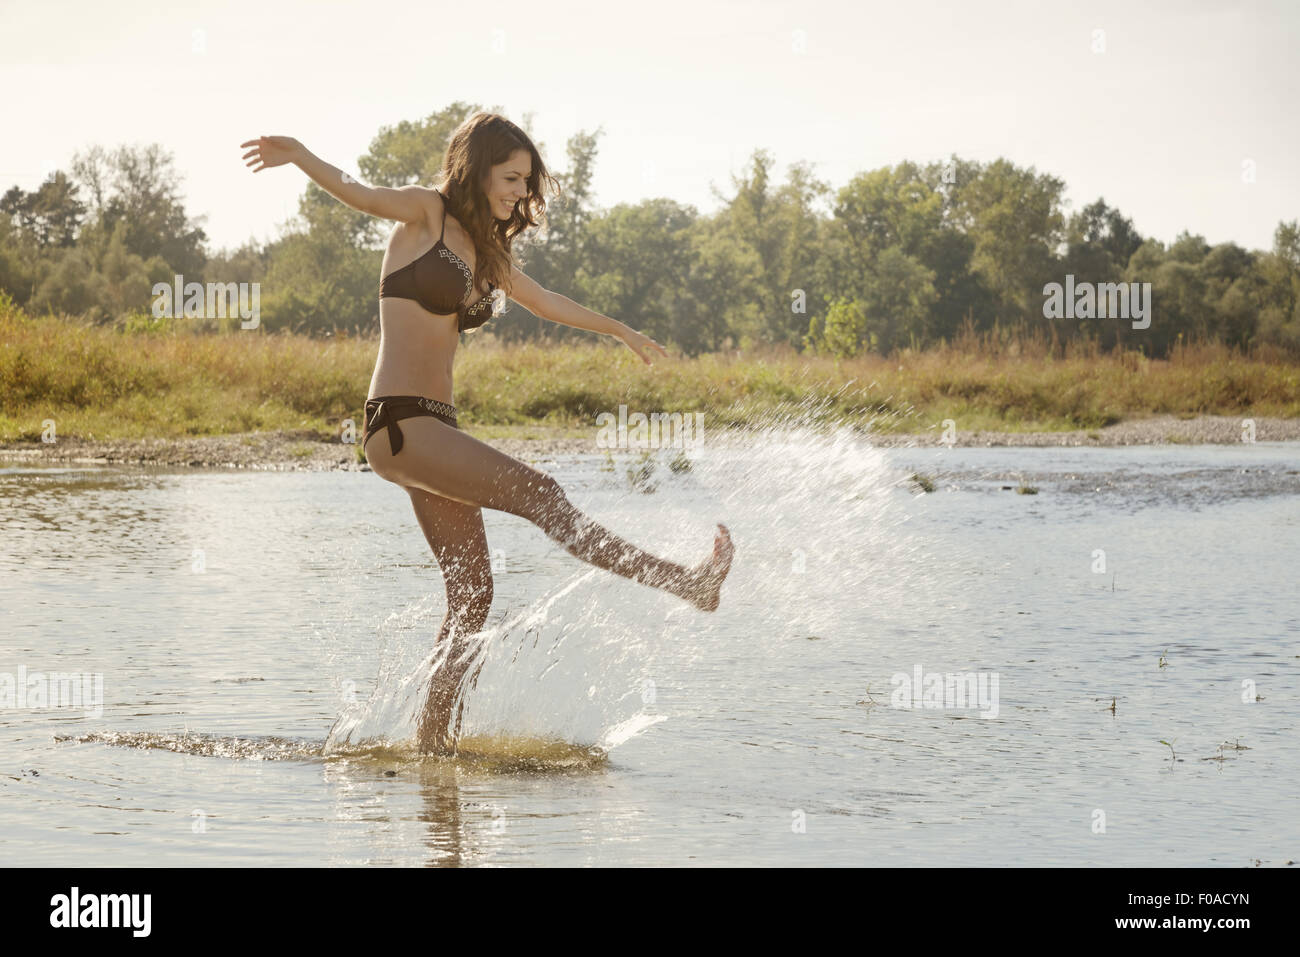 Young woman wearing a bikini splashing and playing in river Stock Photo